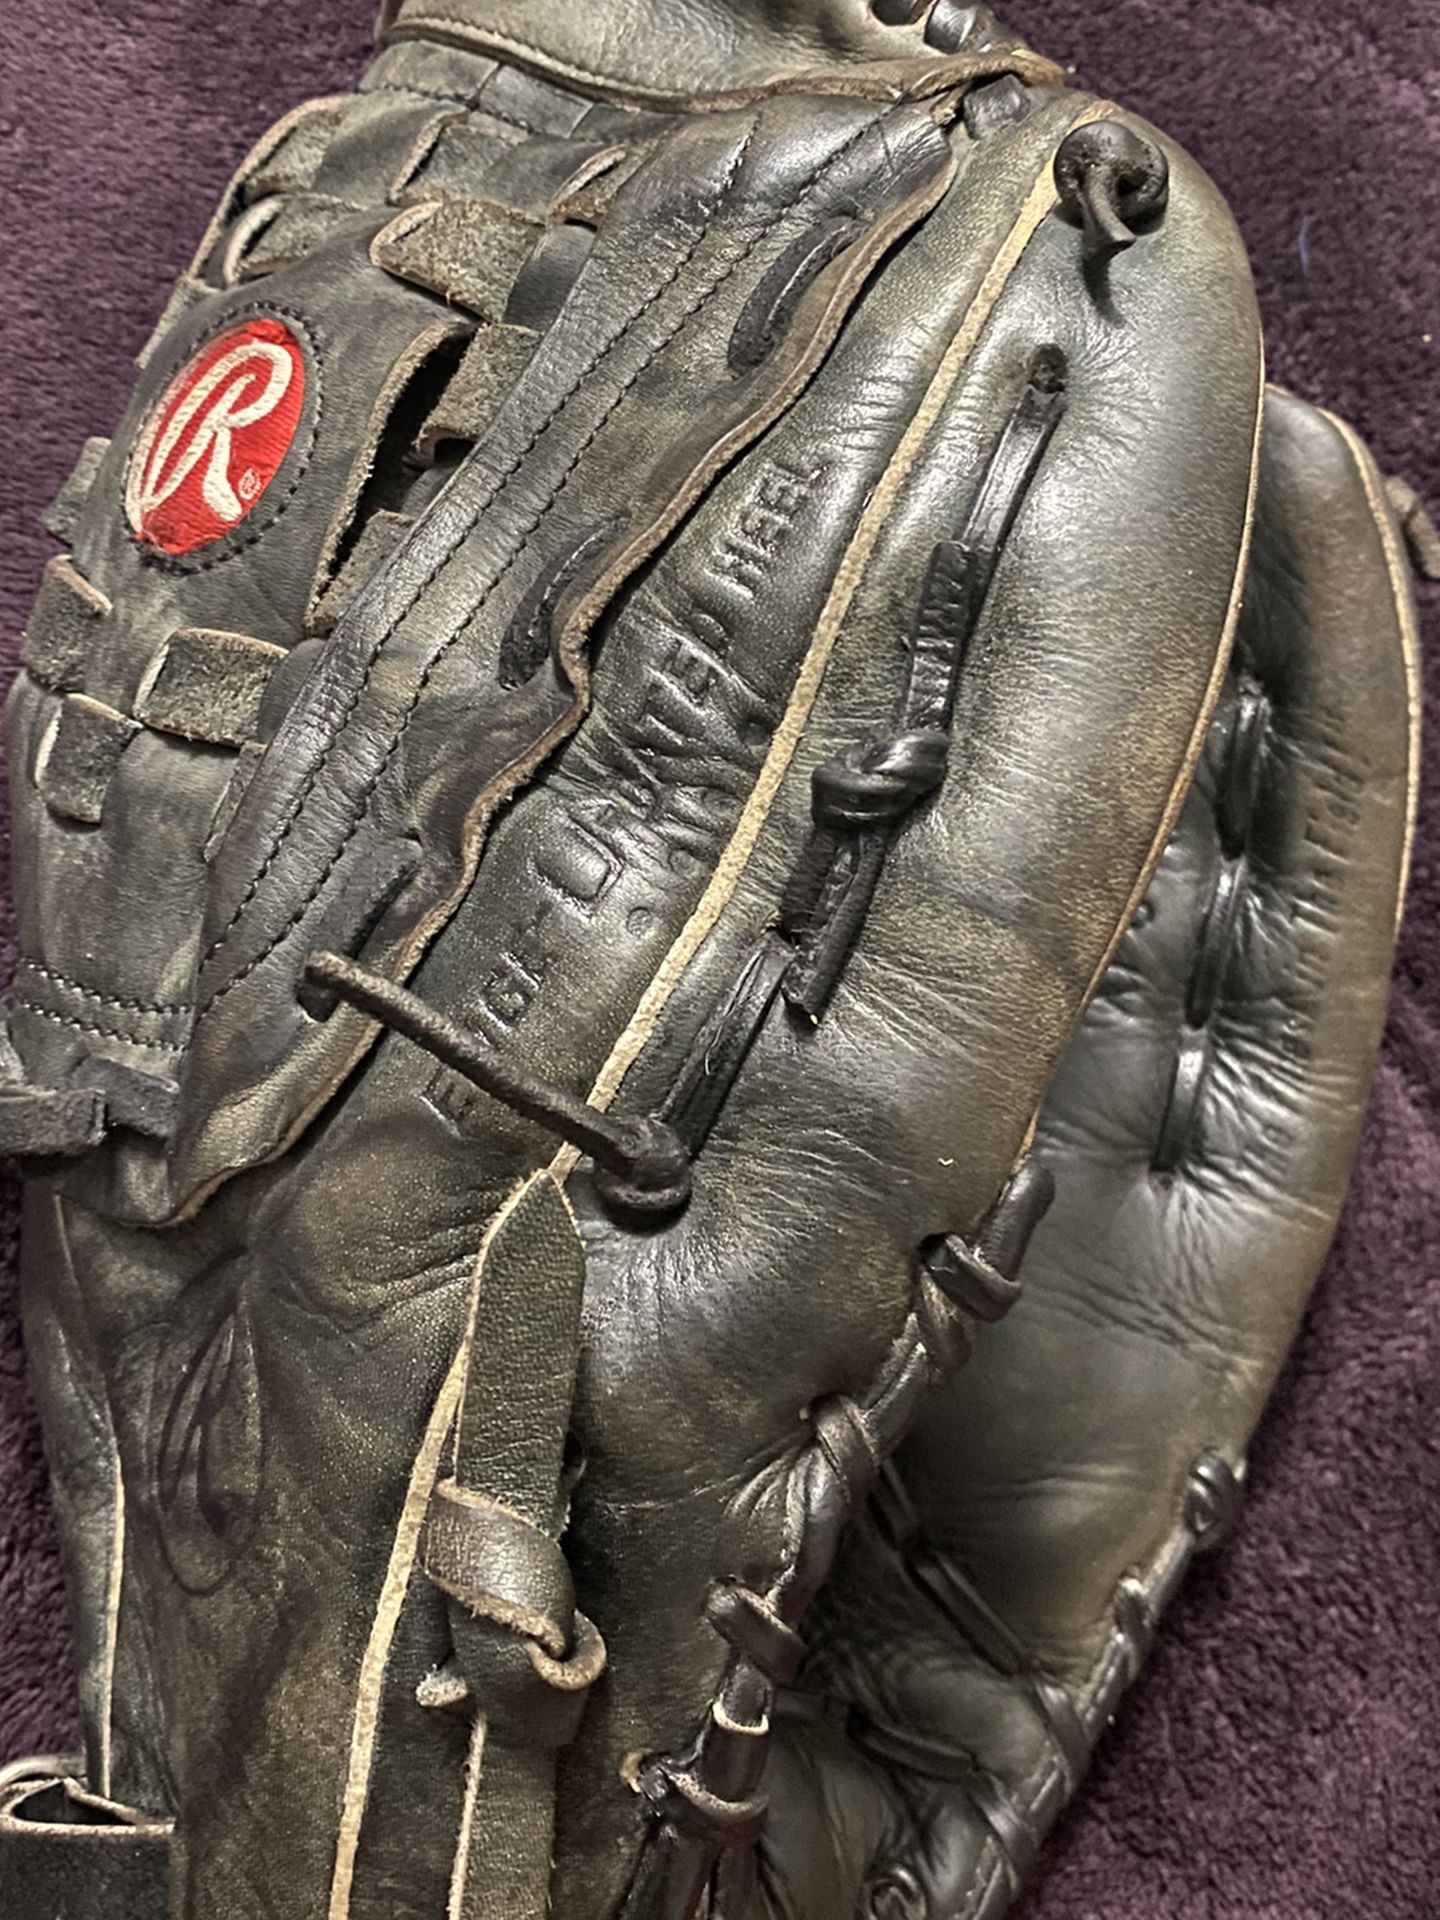 Rawlings Heritage Series Softball Glove